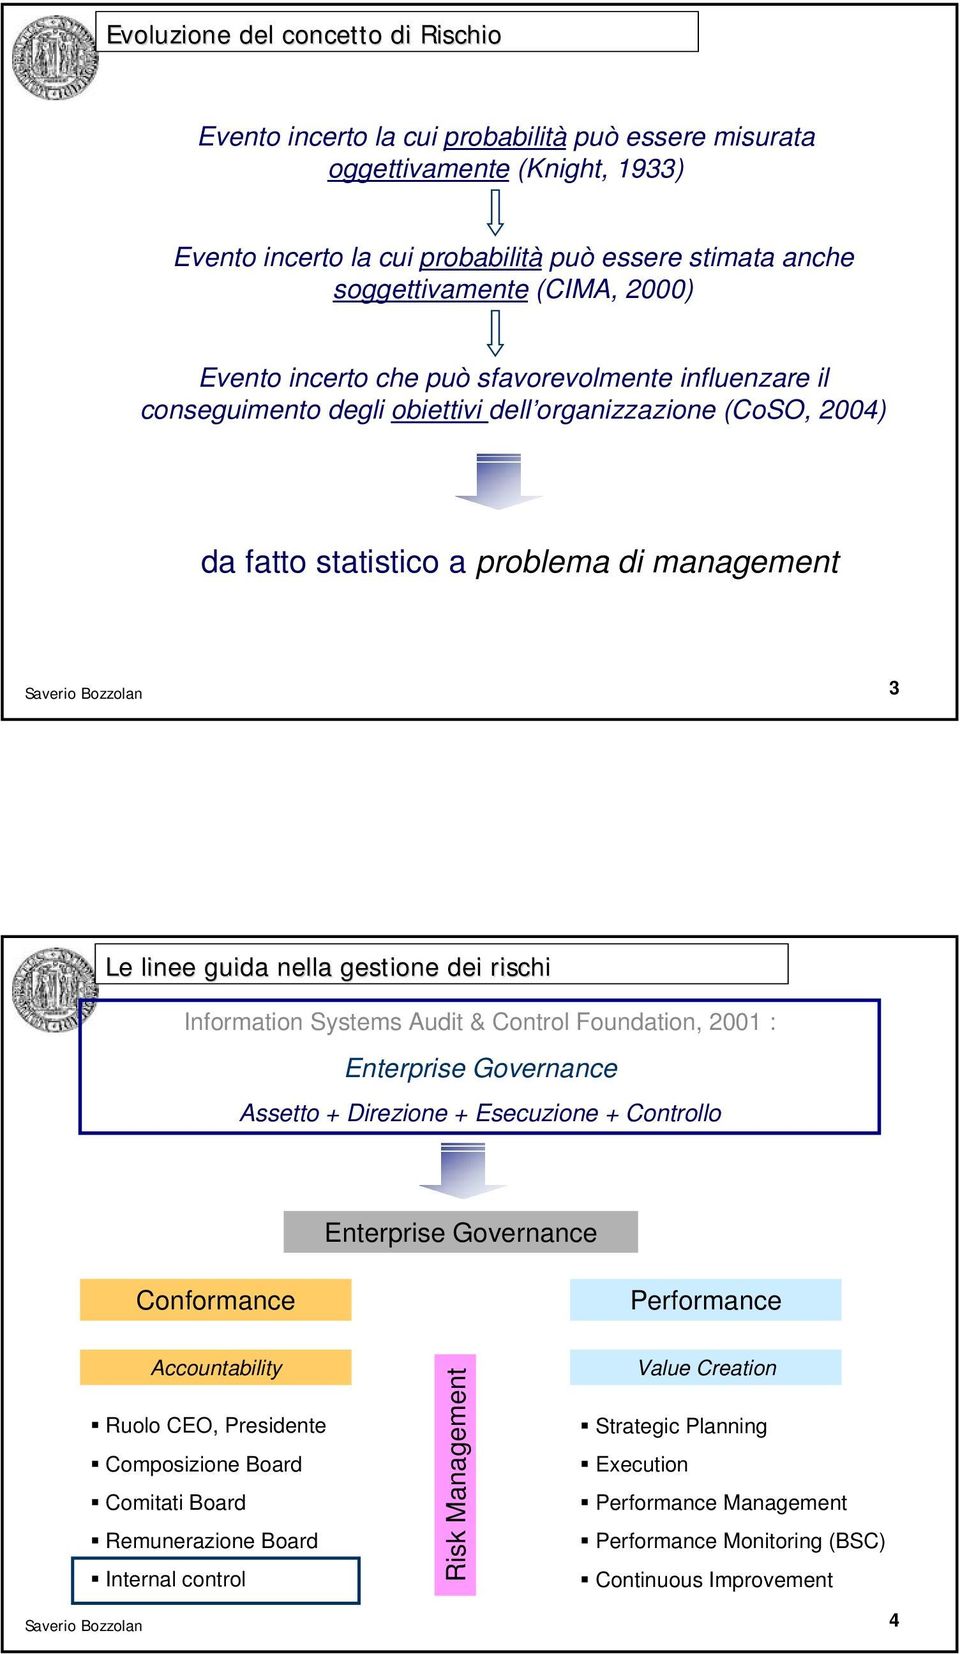 Information Sytem Audit & Control Foundation, 2001 : Enterprie Governance Aetto + Direzione + Eecuzione + Controllo Enterprie Governance Conformance Performance Accountability Ruolo CEO, Preidente